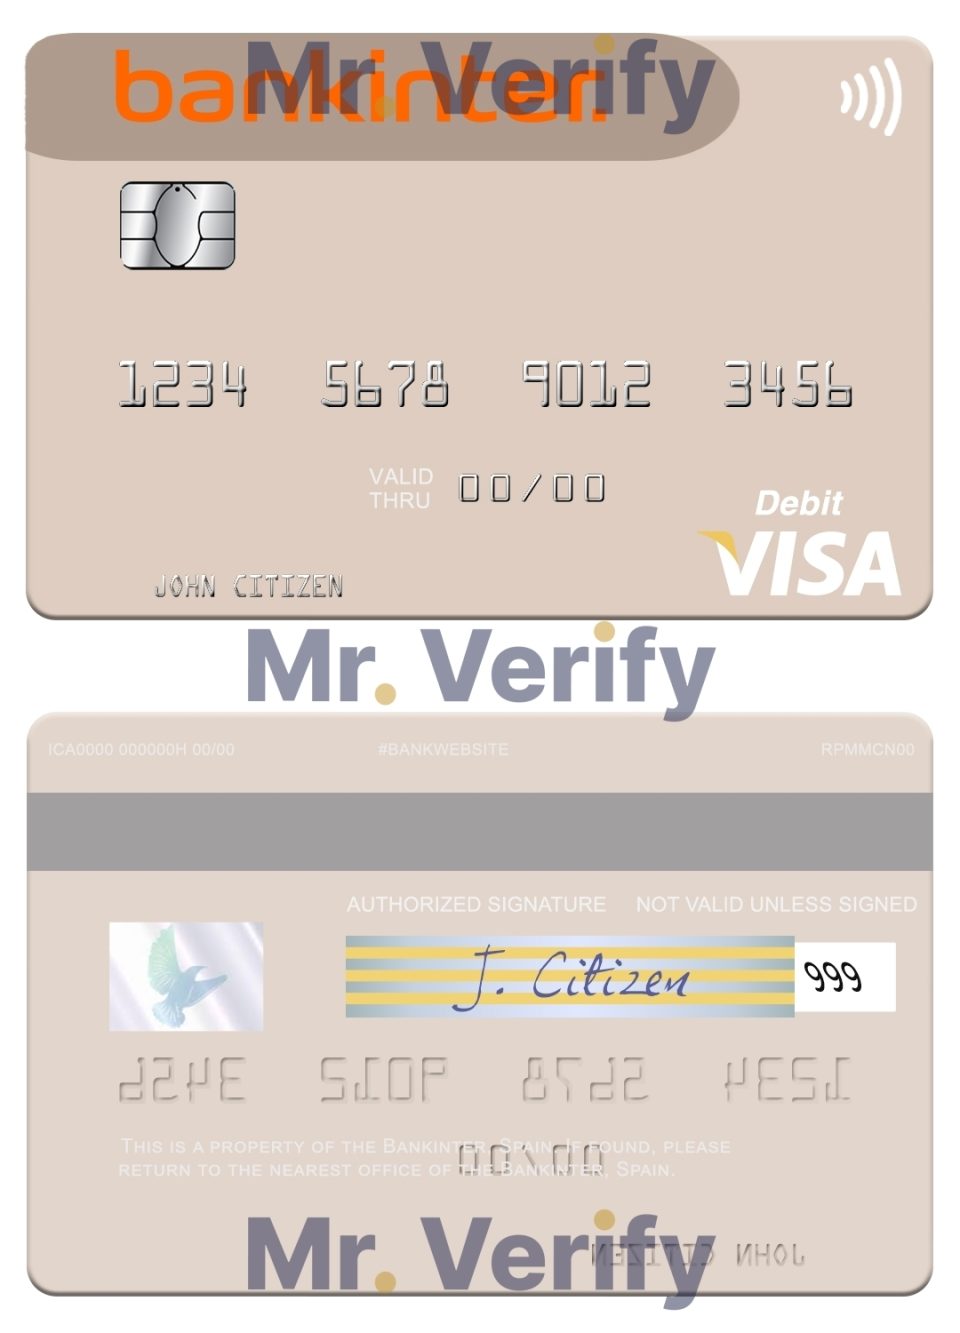 Fillable Spain Bankinter visa debit card Templates | Layer-Based PSD